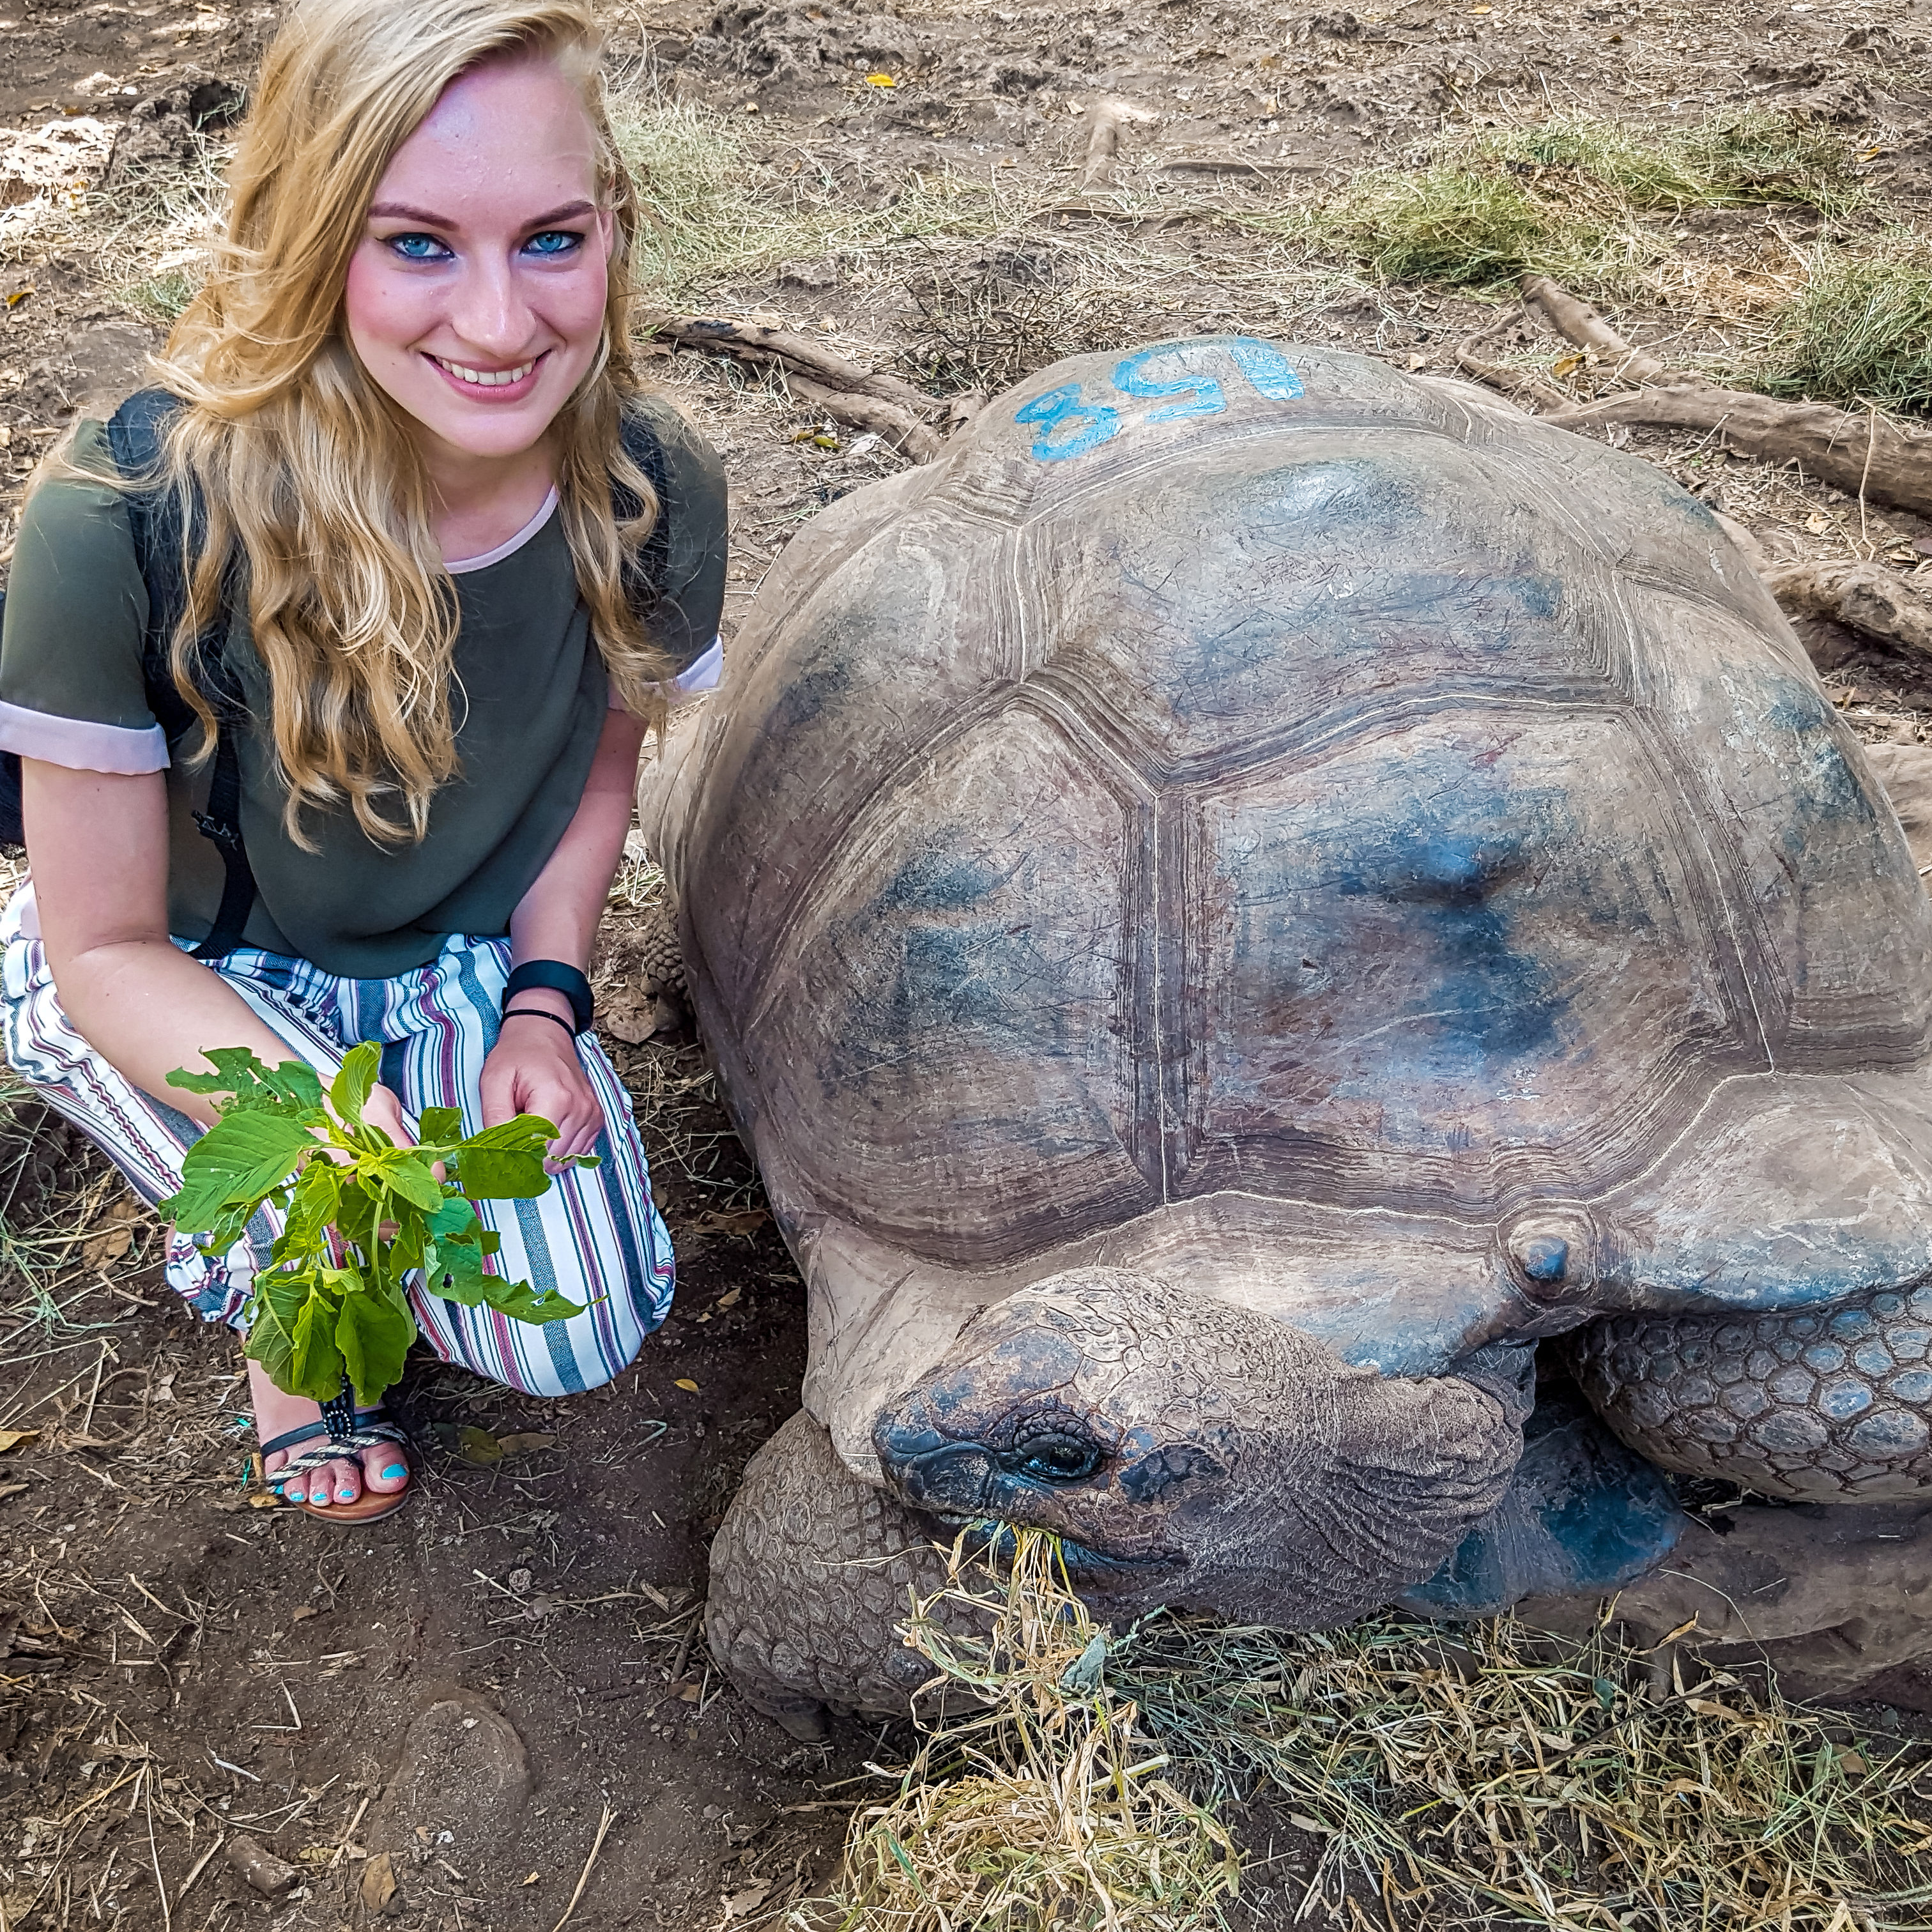 Feeding an Aldabra giant tortoise in Prison Island - Zanzibar - Africa